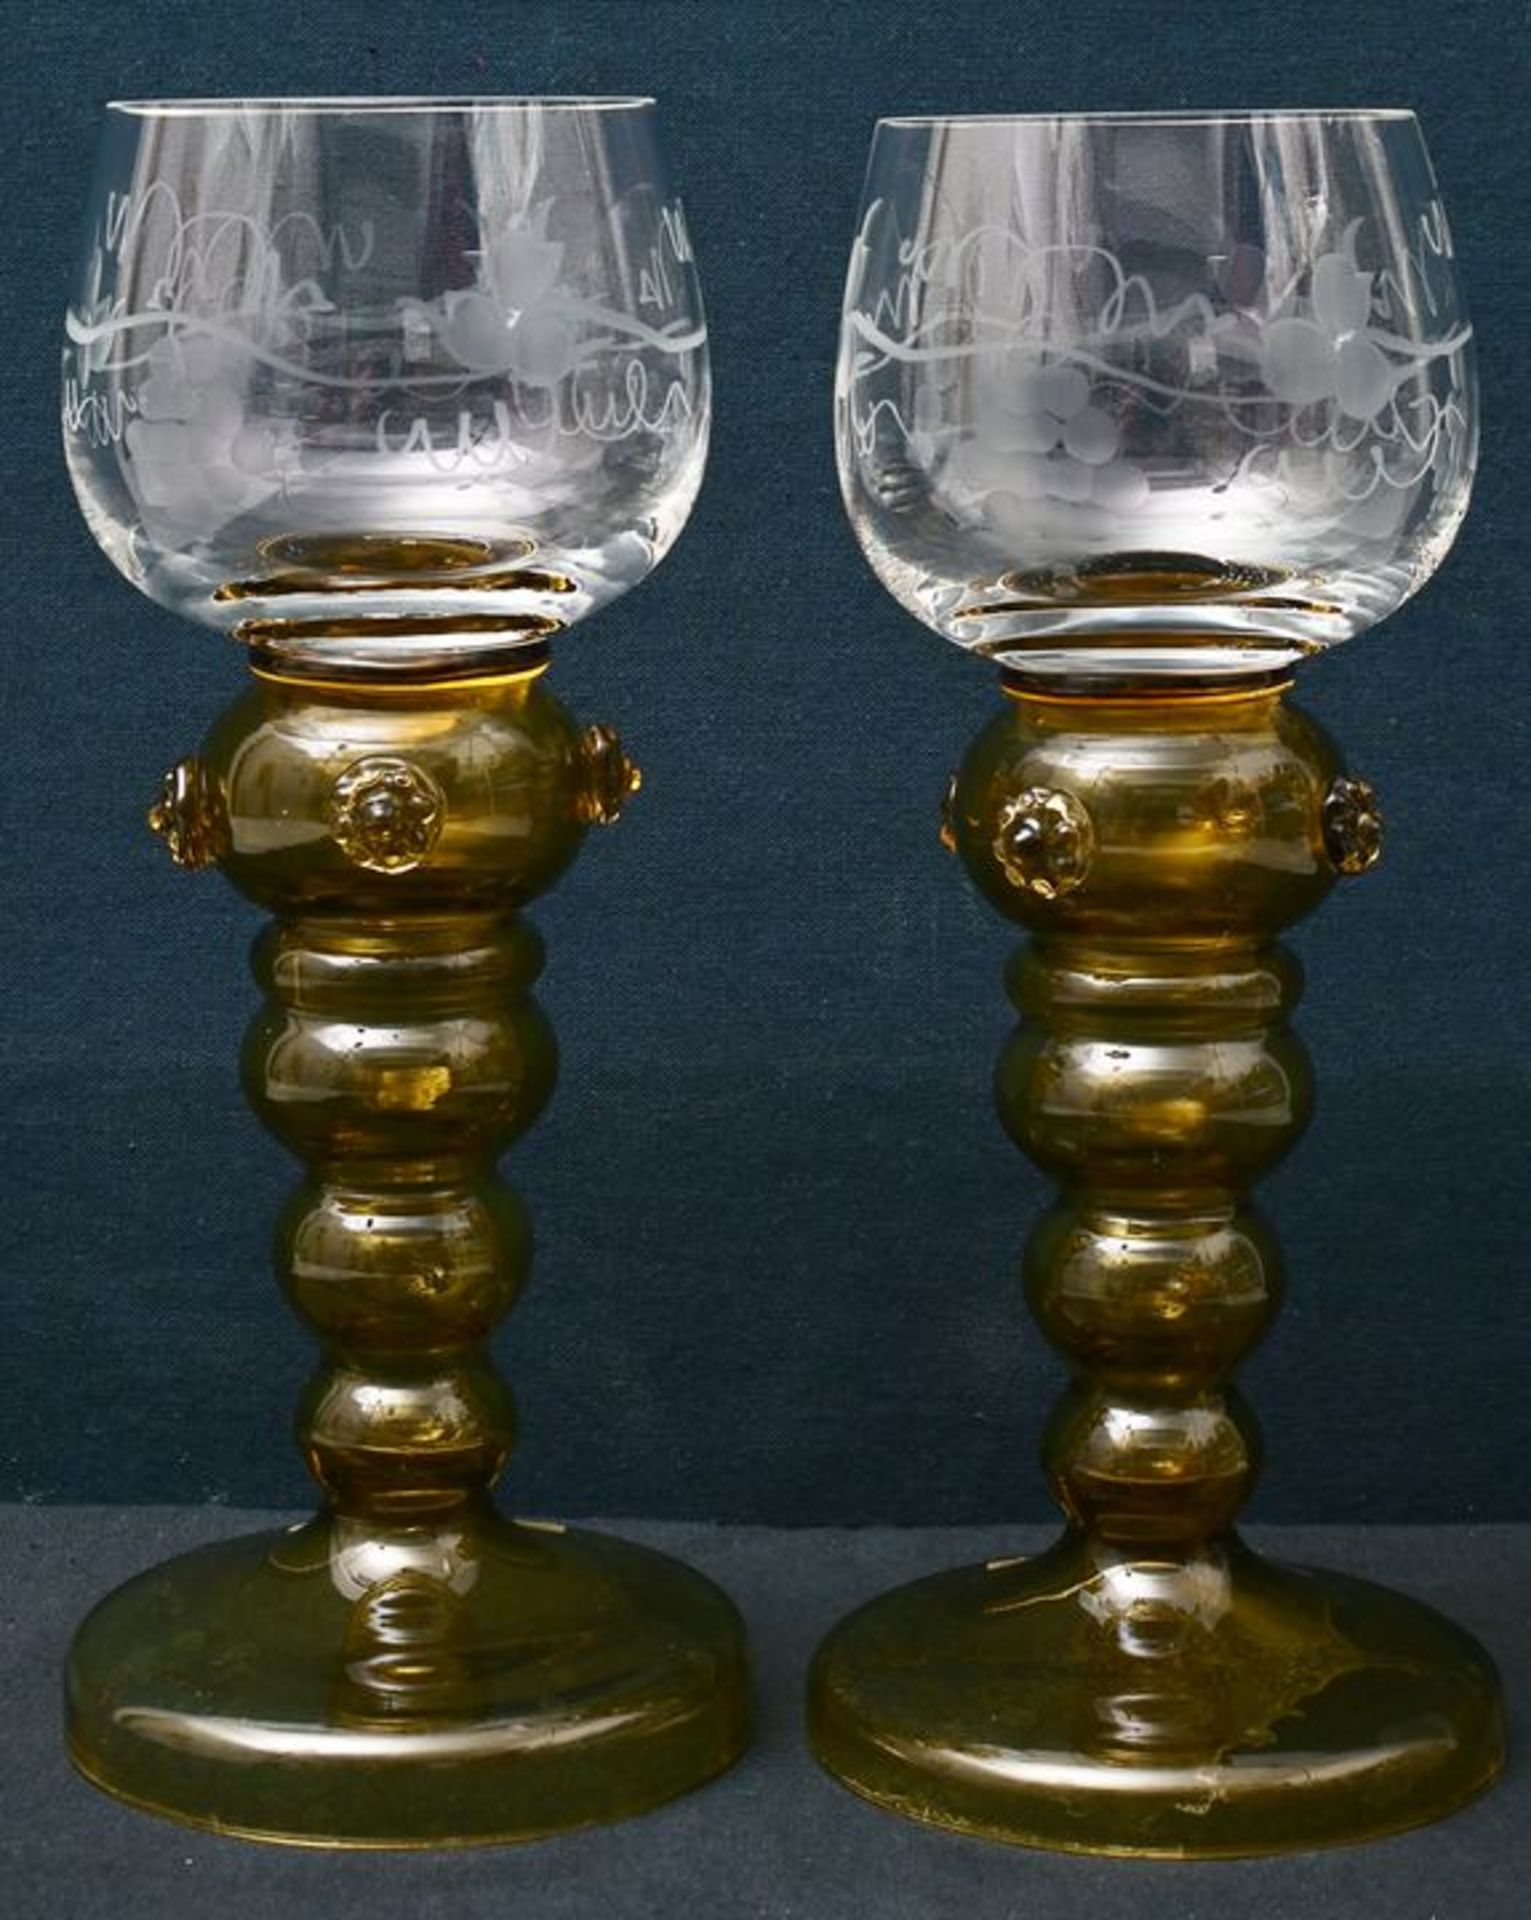 Zwei Römer / Two roemer glasses